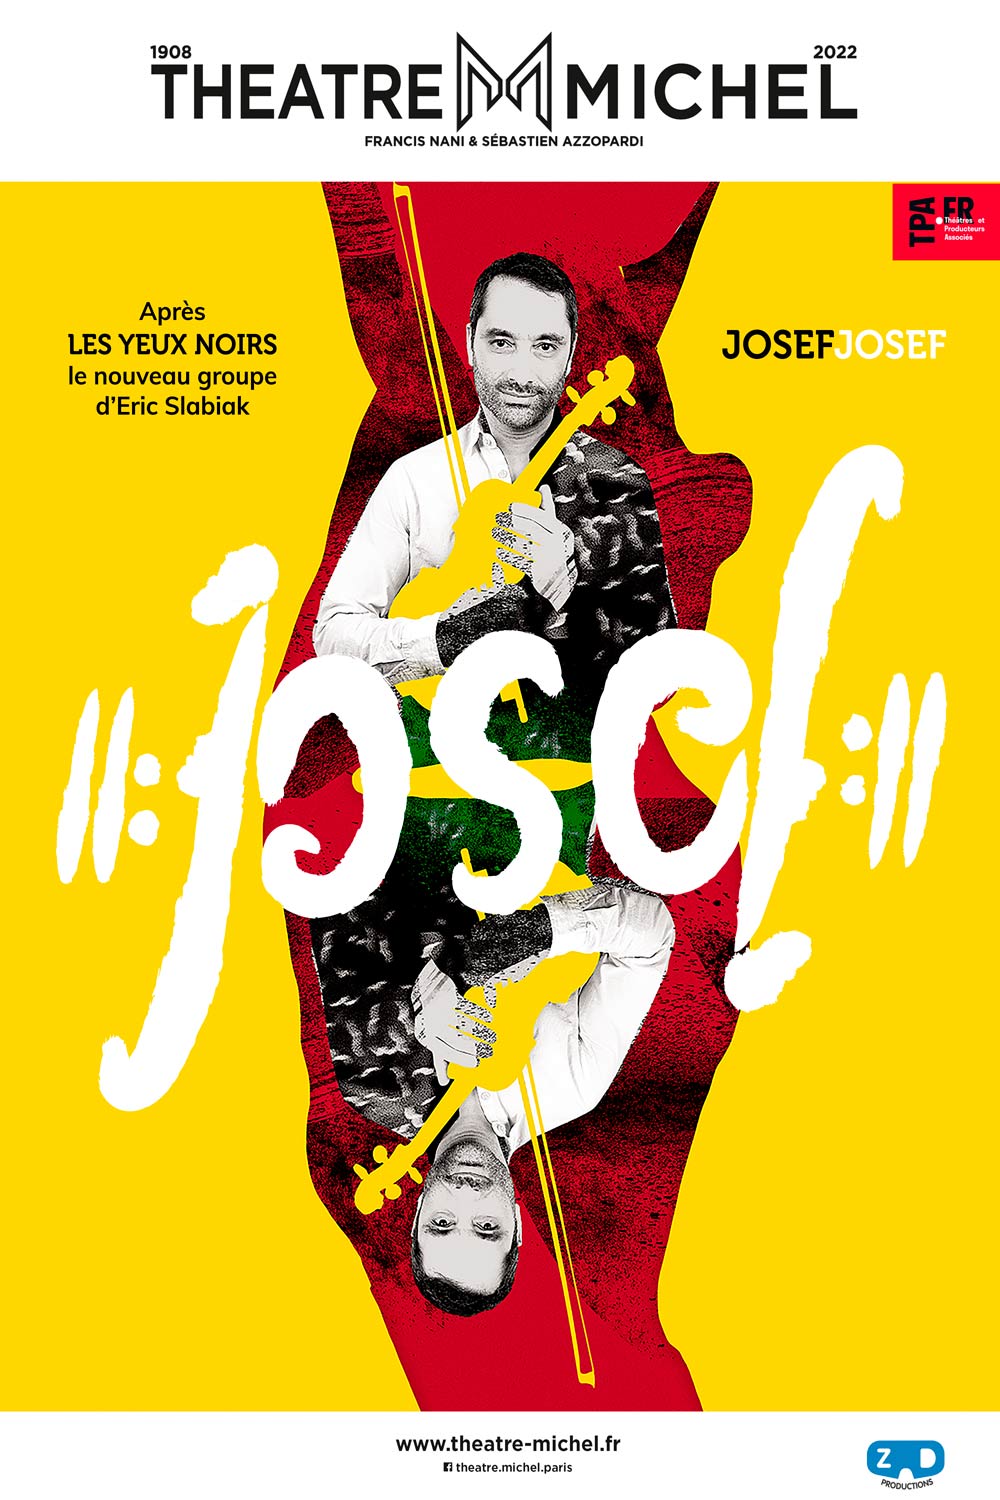 Josef Josef au Théâtre Michel